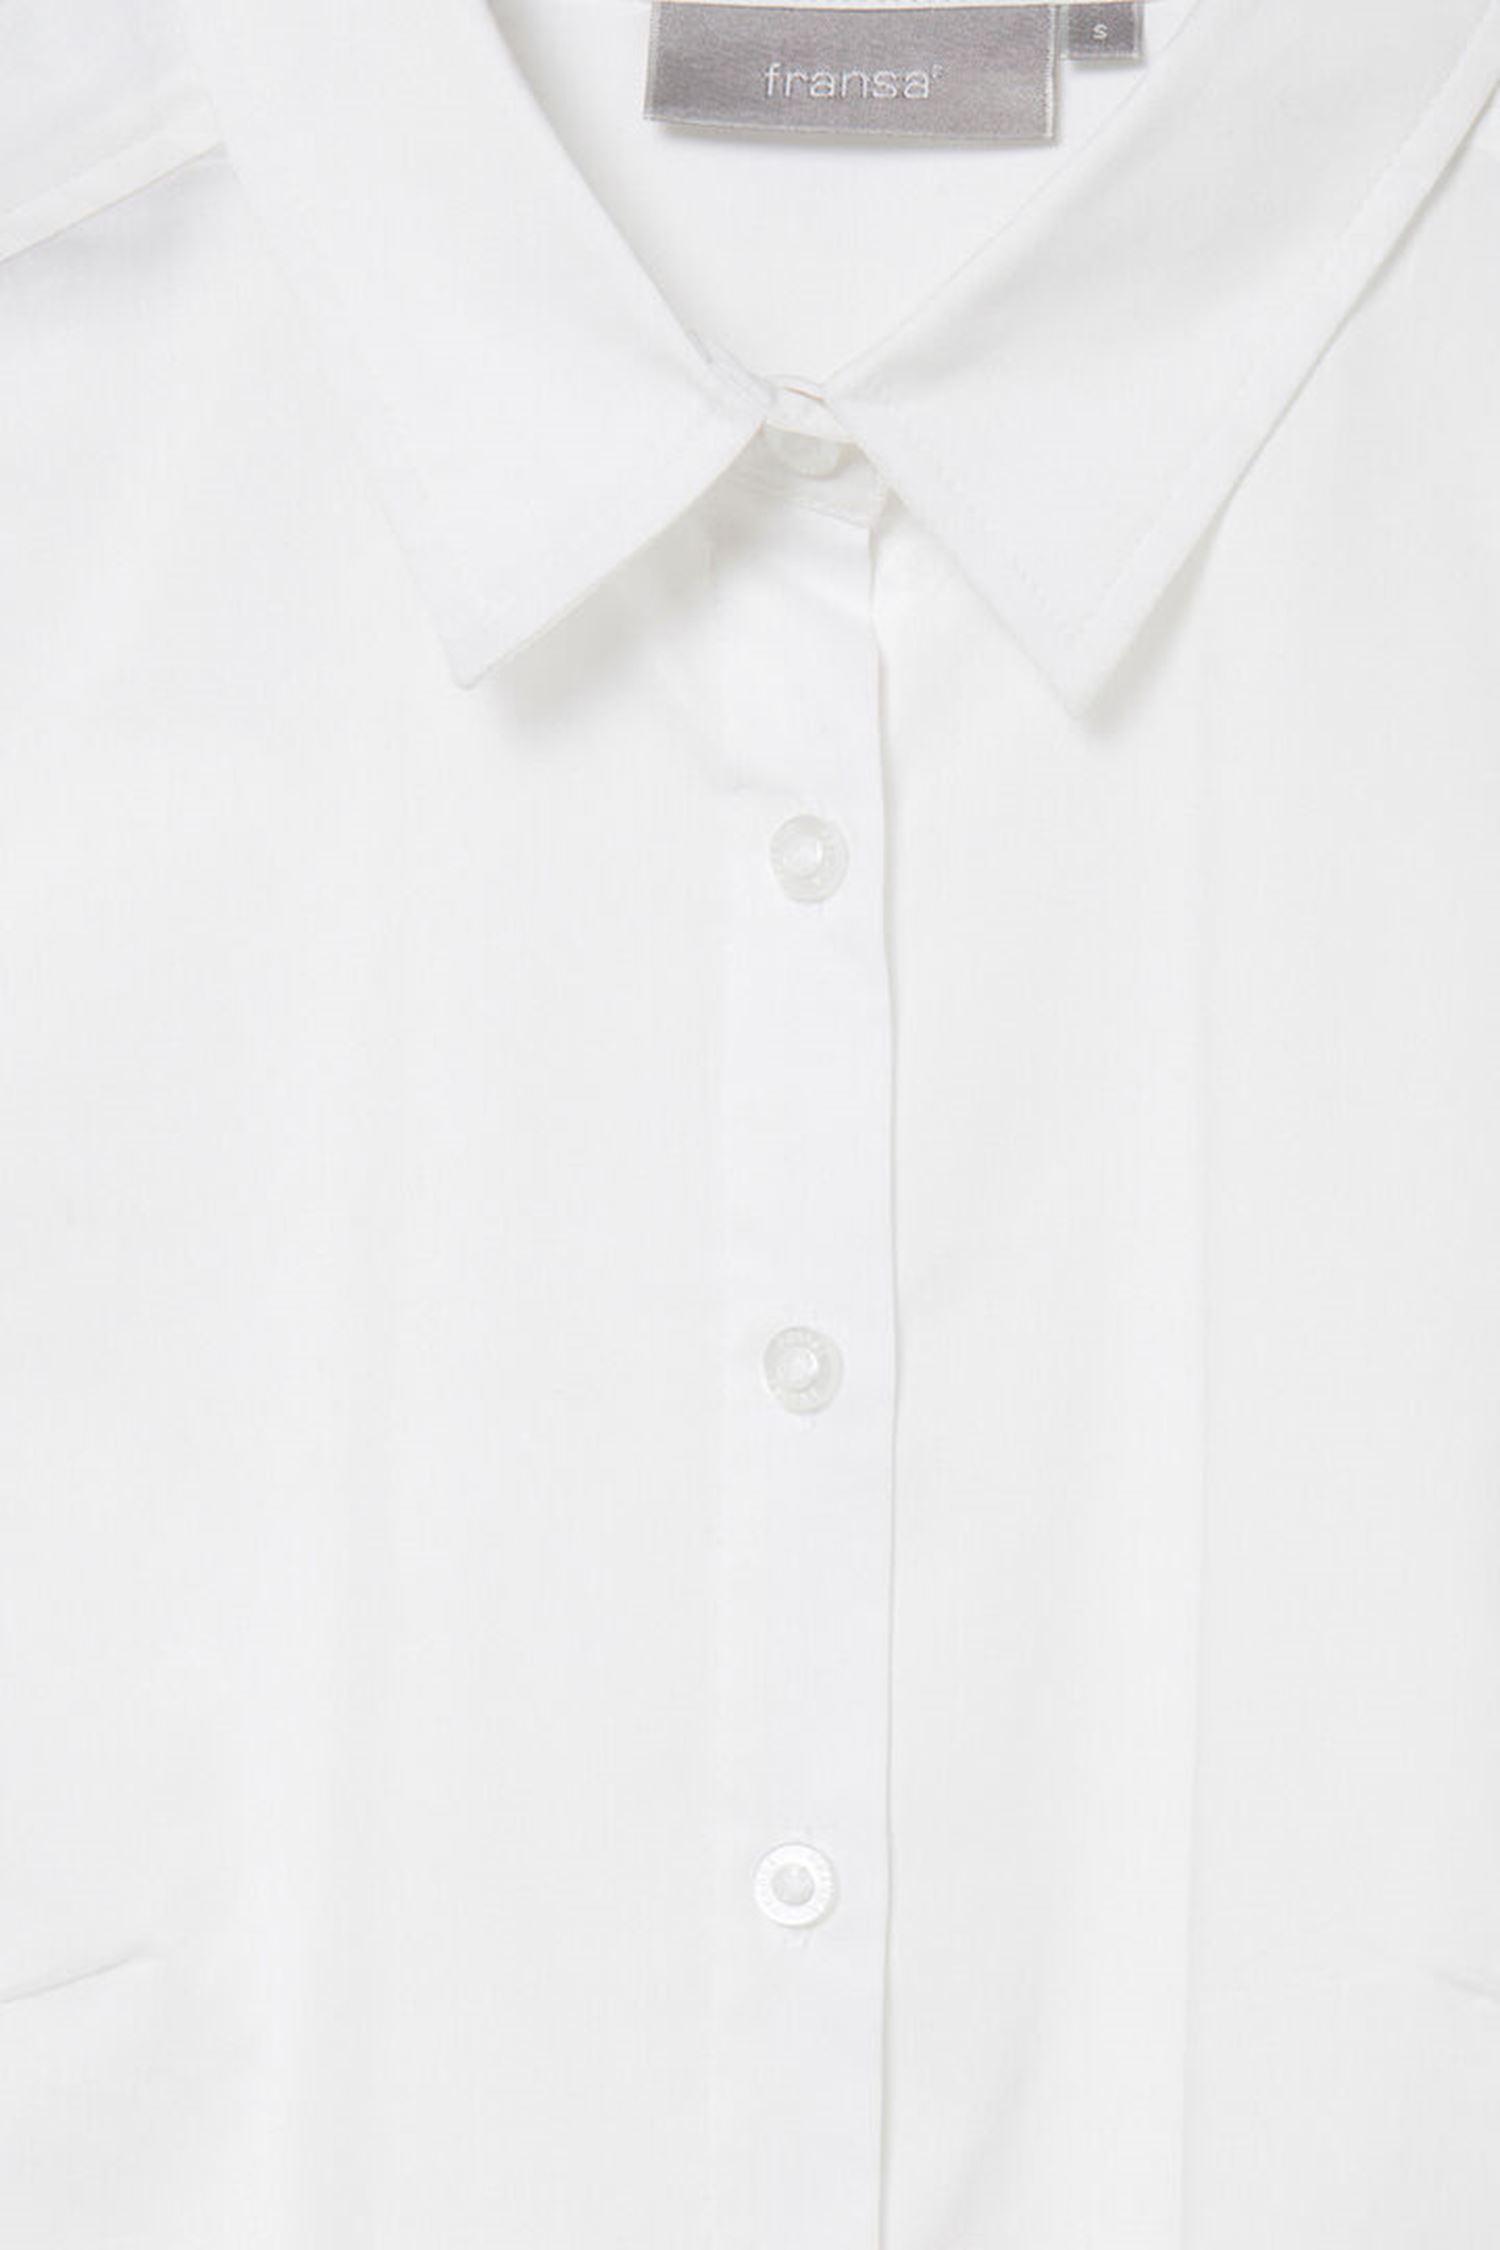  Zashirt 1 skjorte, white, large